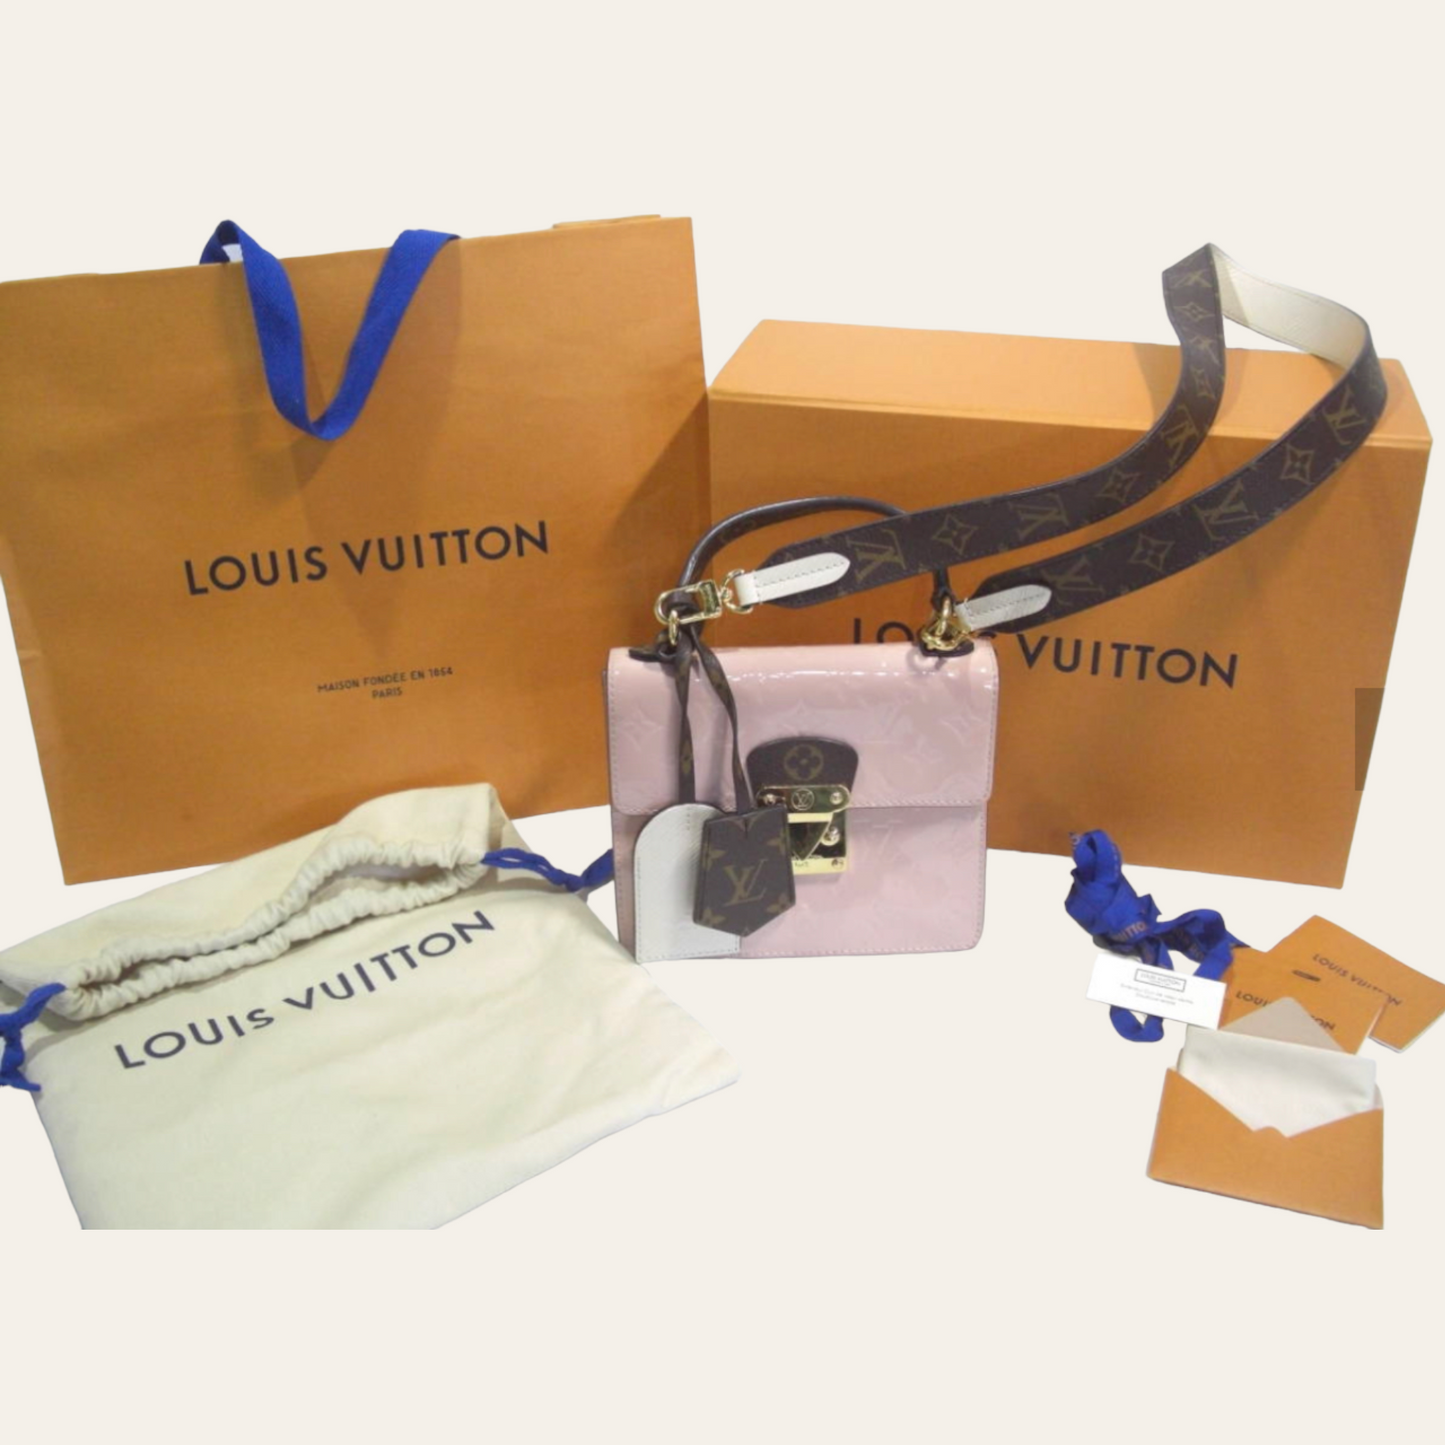 Louis Vuitton Spring Street